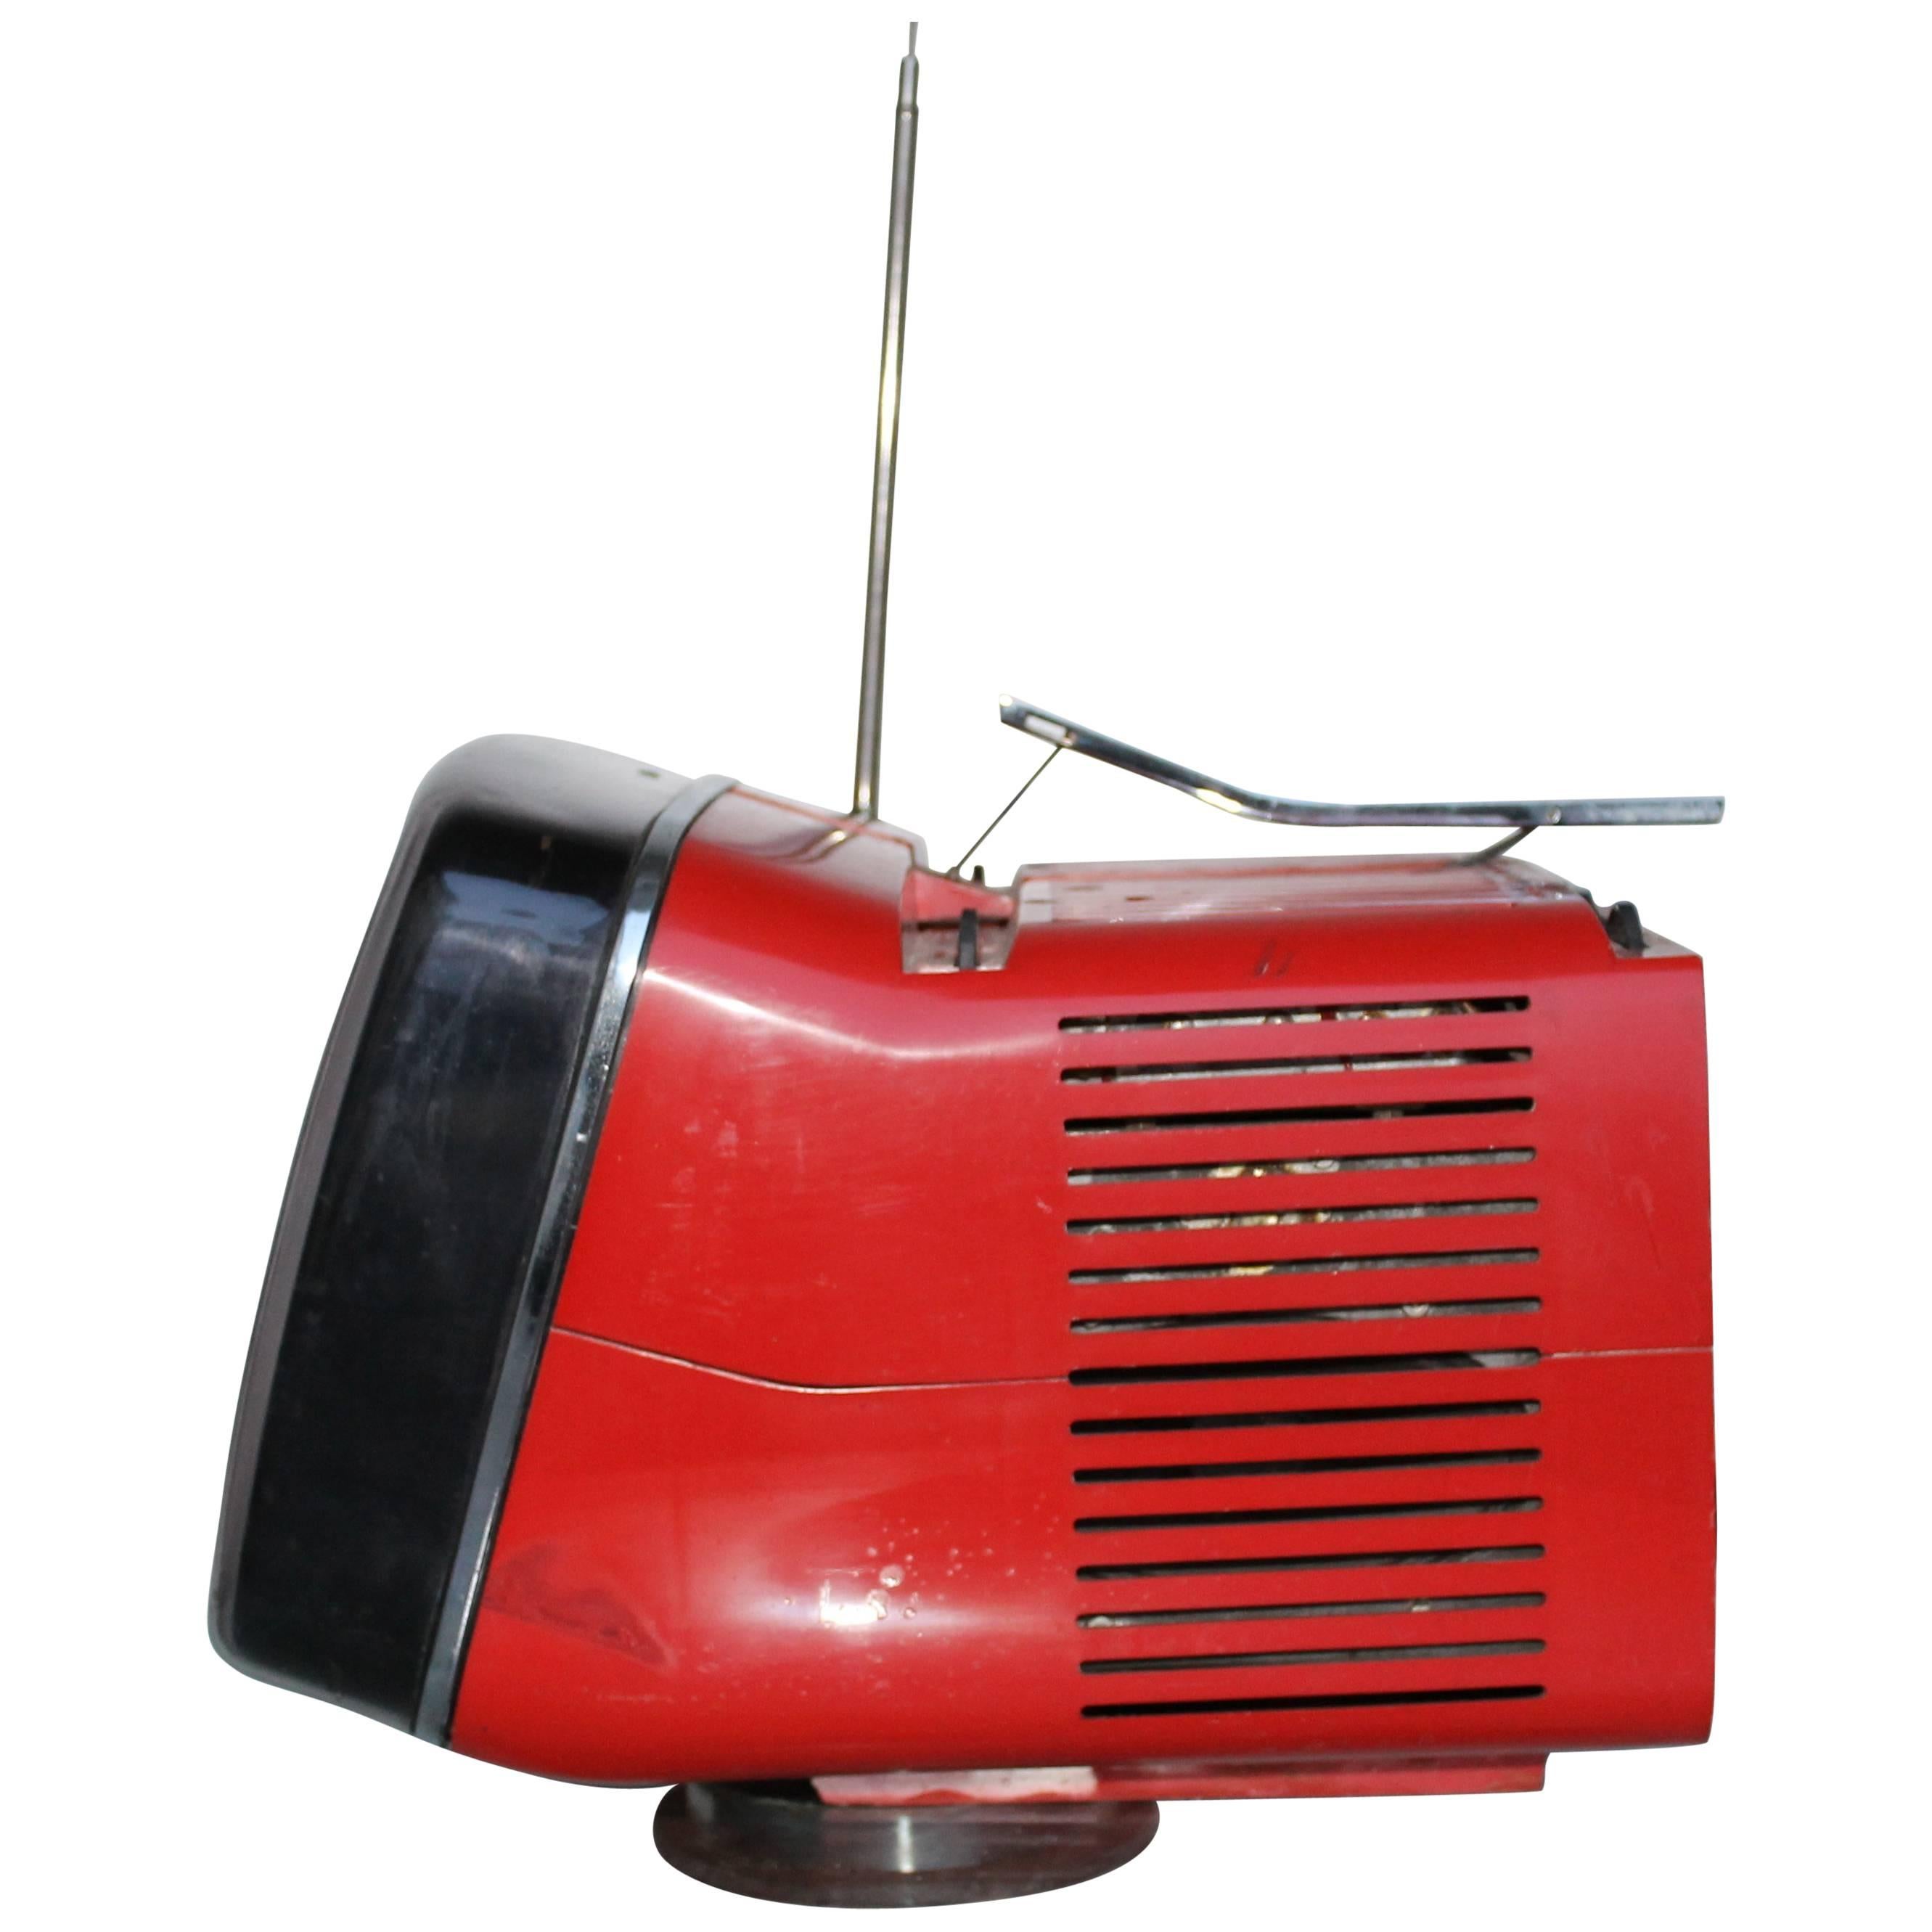 Brionvega Algol 11 Portable Red Television